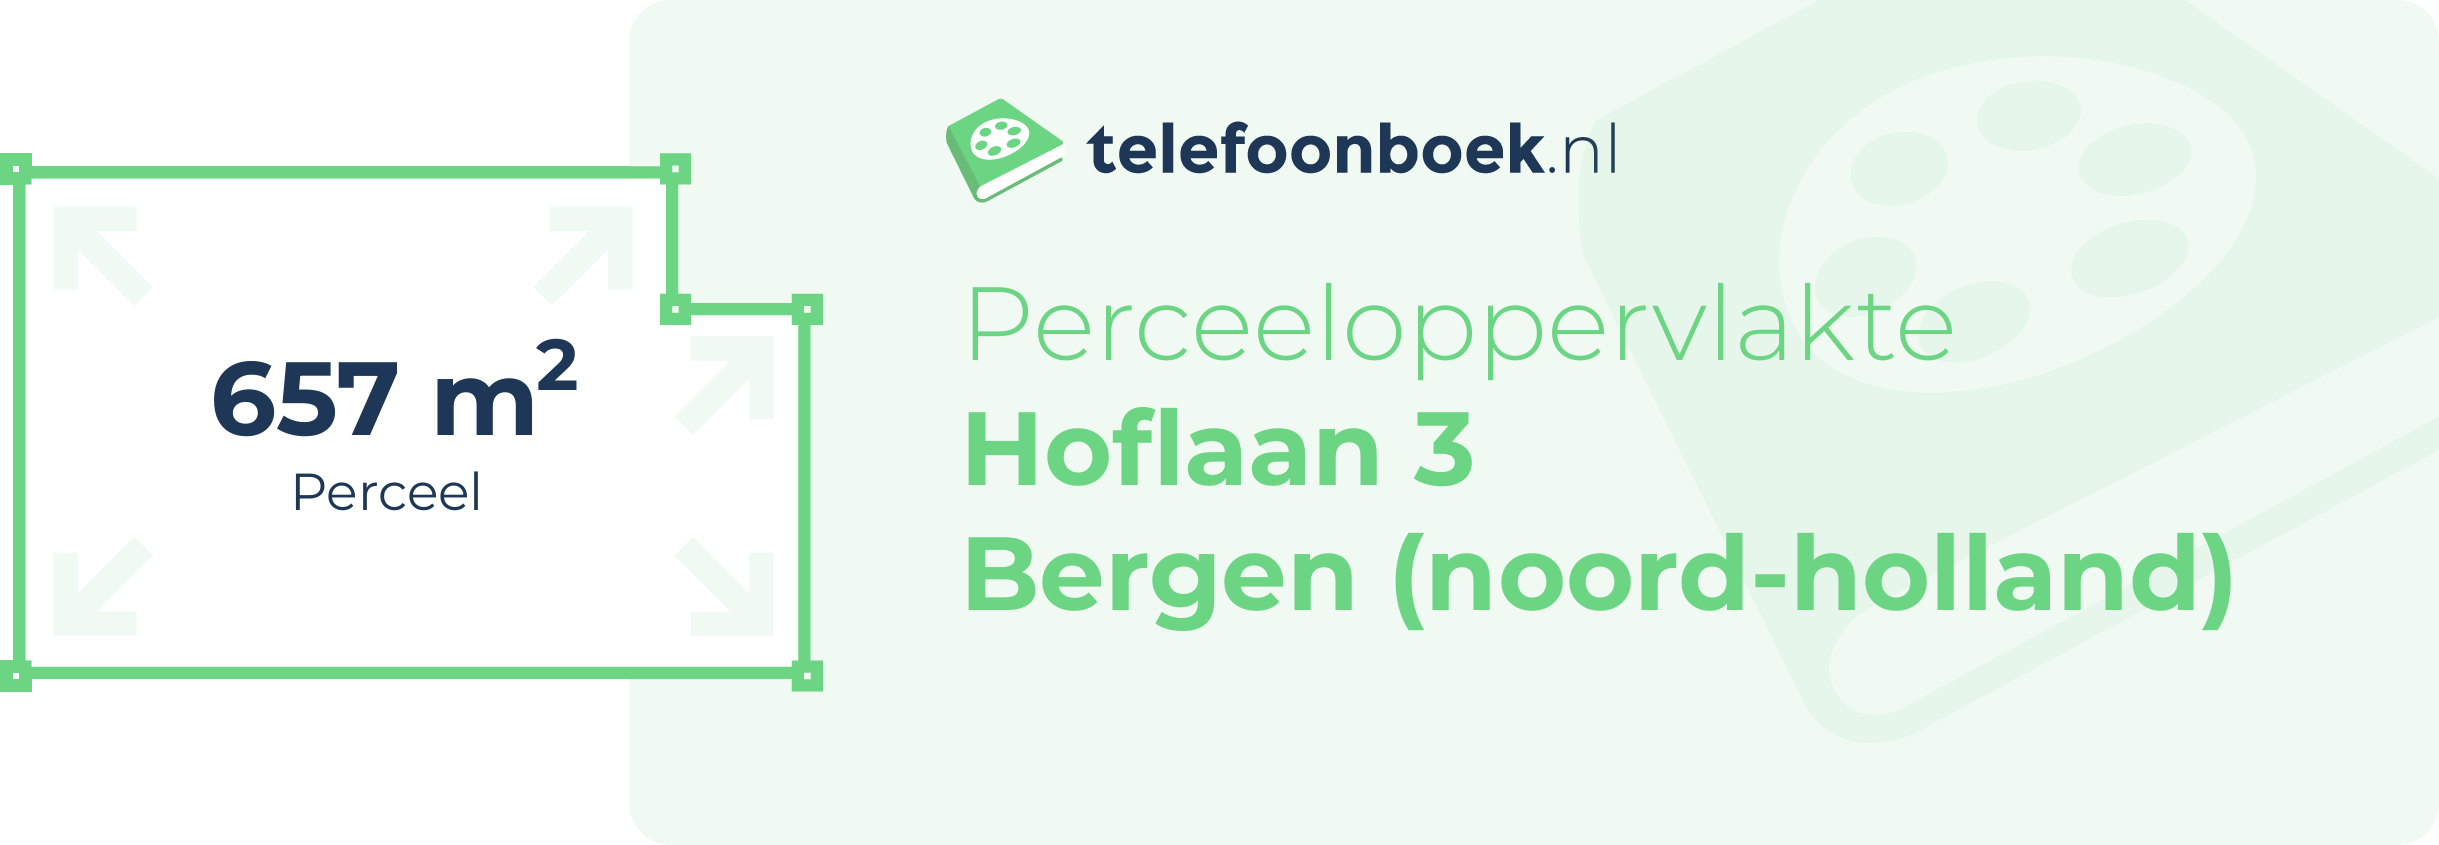 Perceeloppervlakte Hoflaan 3 Bergen (Noord-Holland)